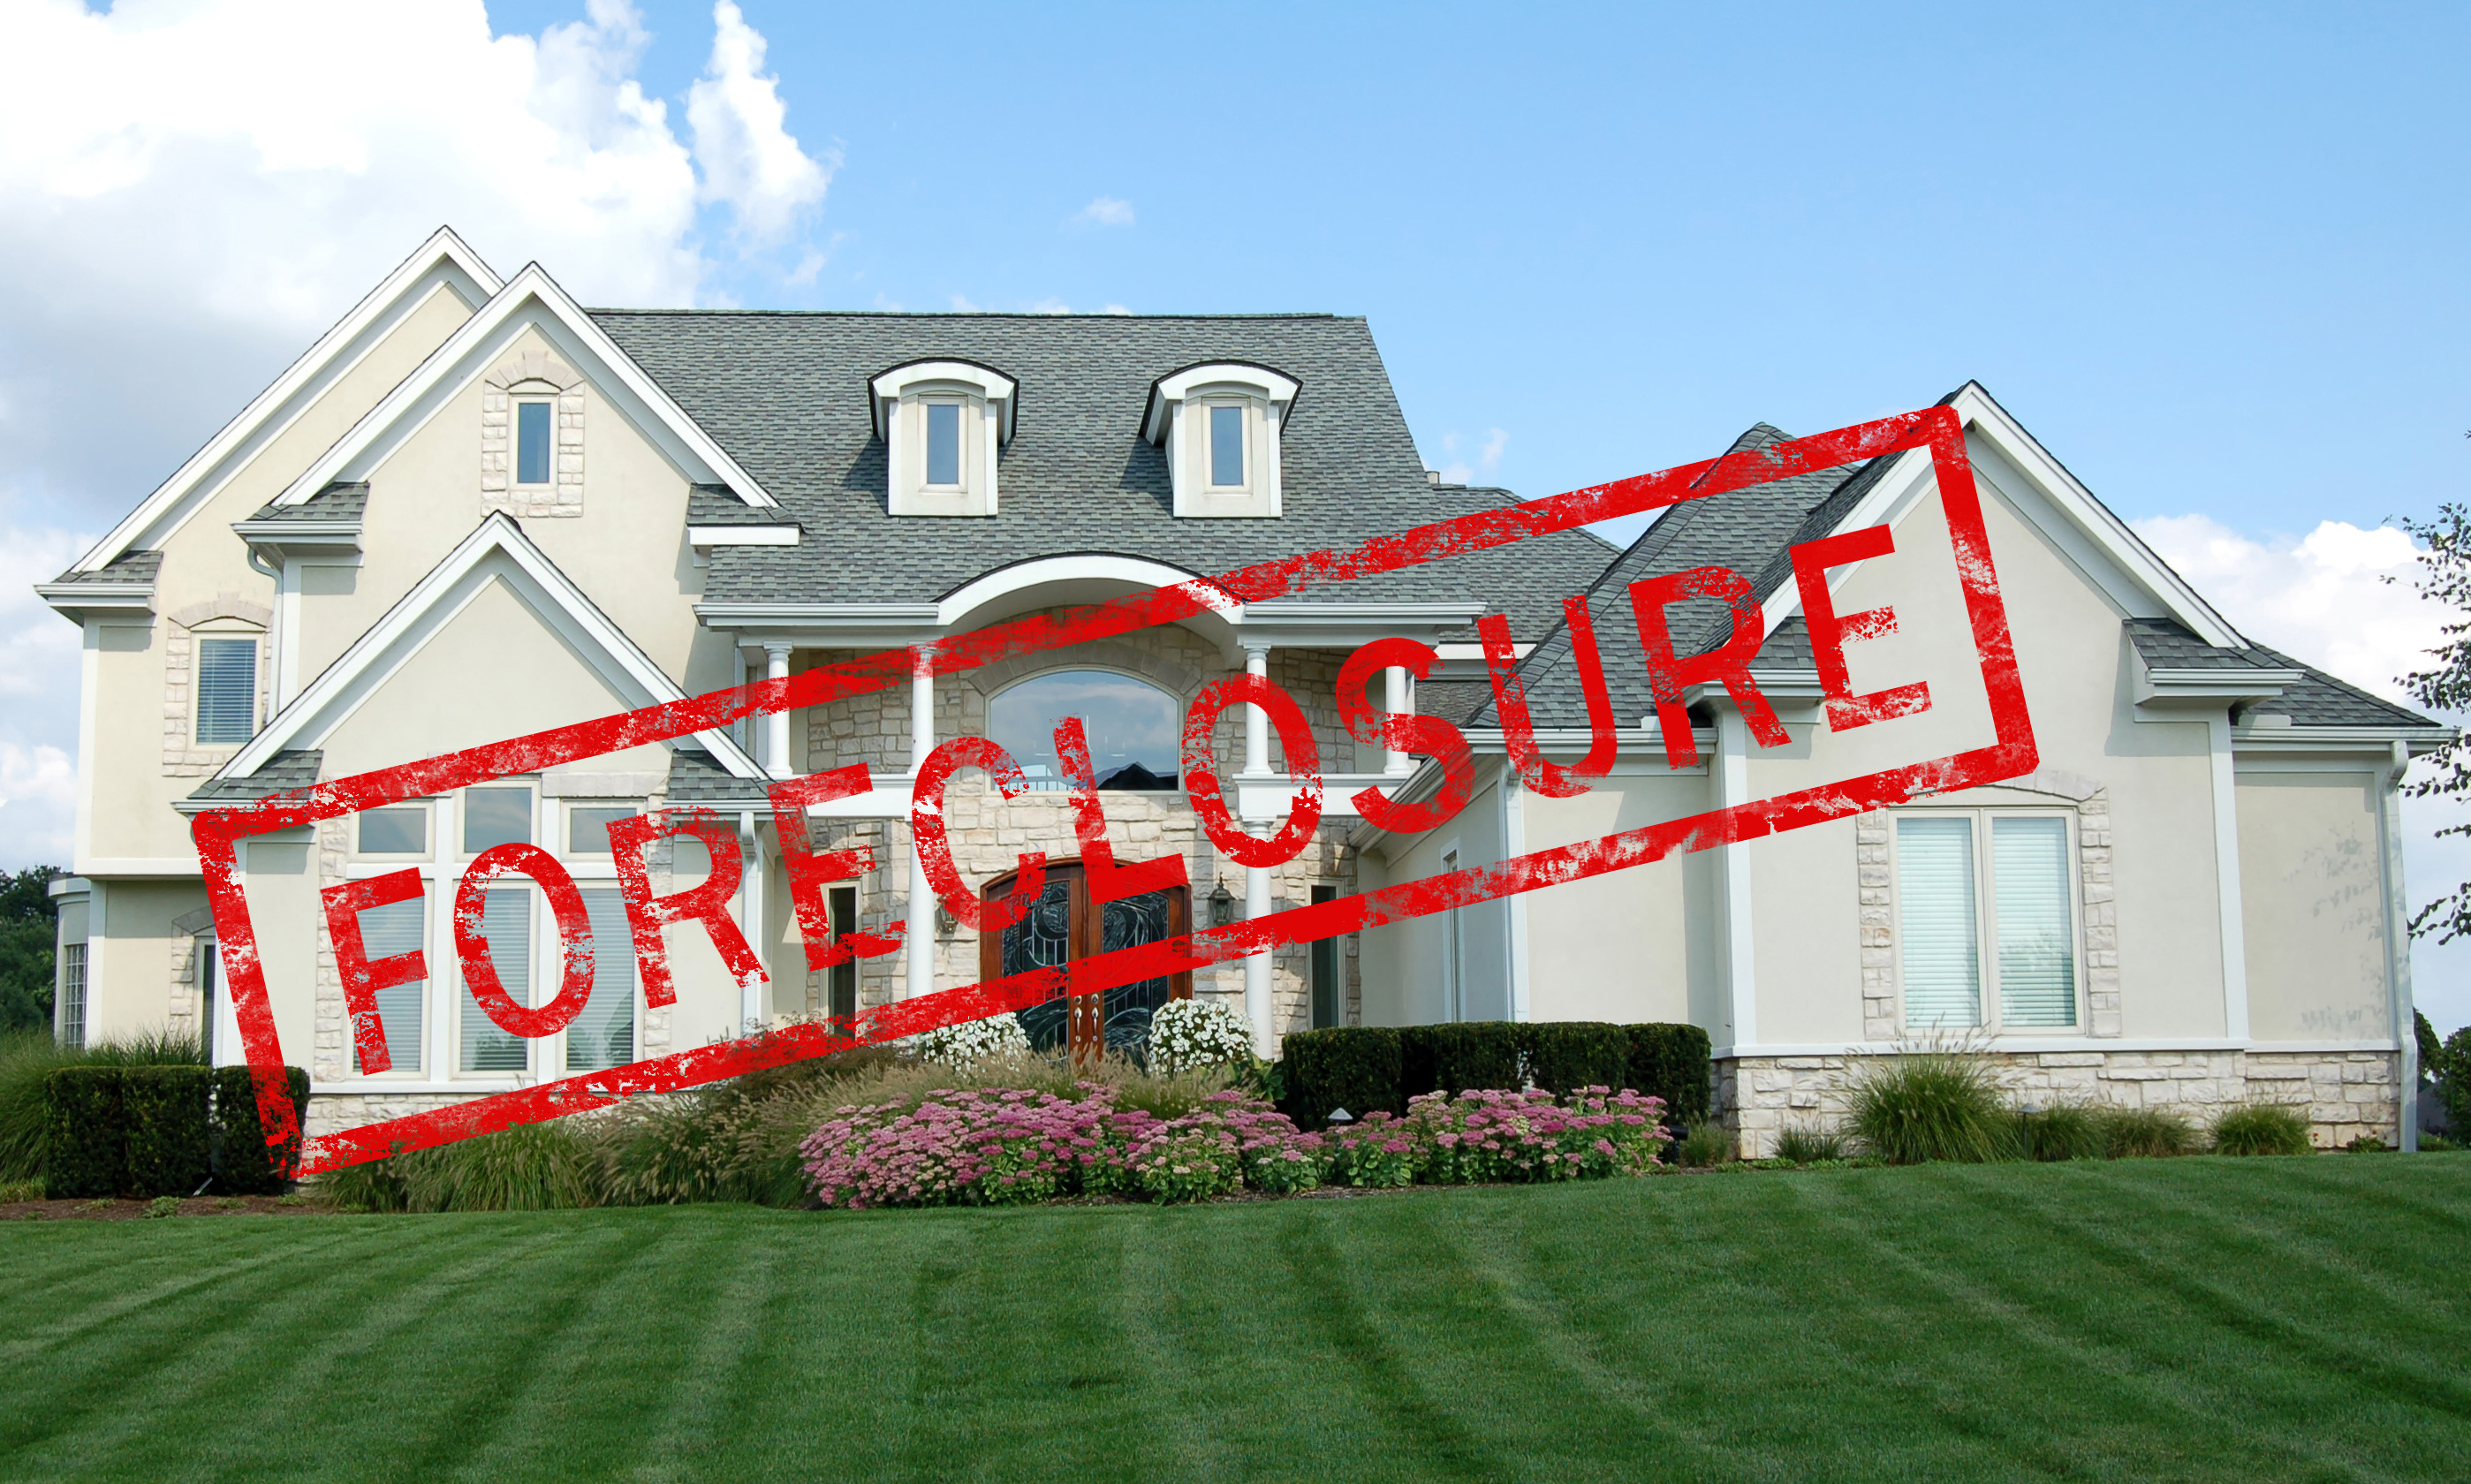 Call Thornton Appraisal Services when you need appraisals regarding Cherokee foreclosures